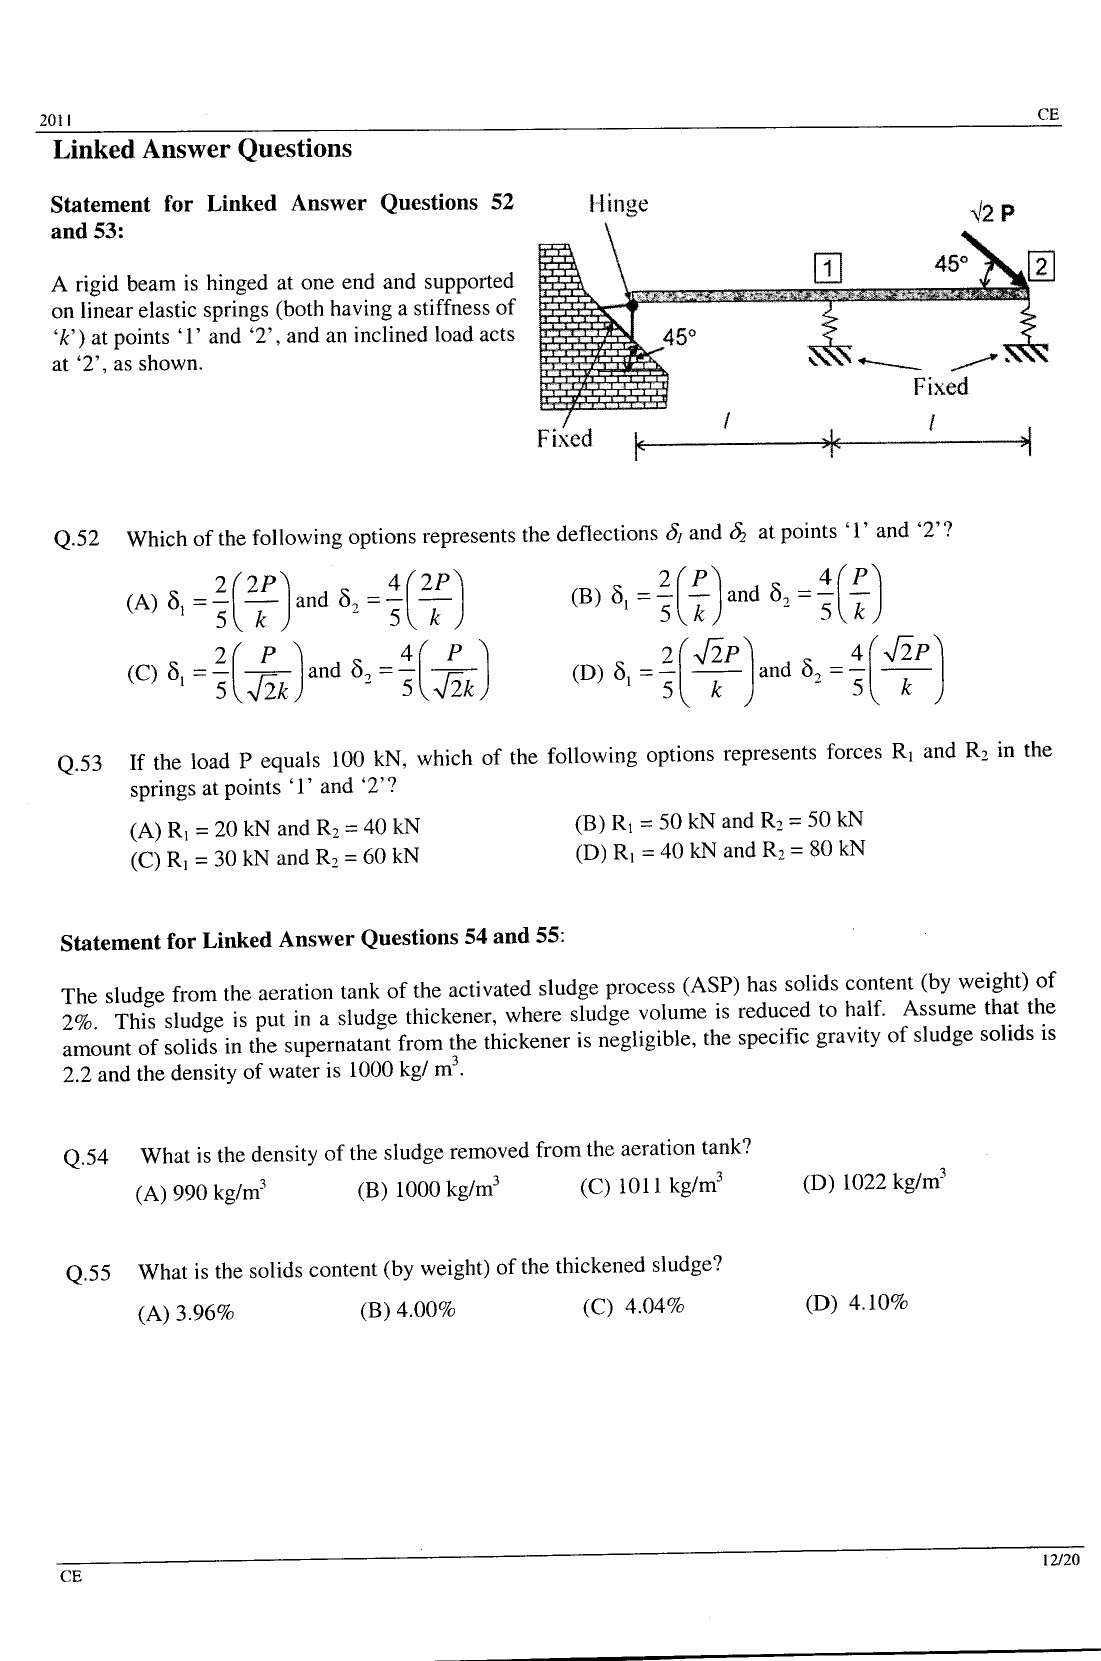 GATE Exam Question Paper 2011 Civil Engineering 12